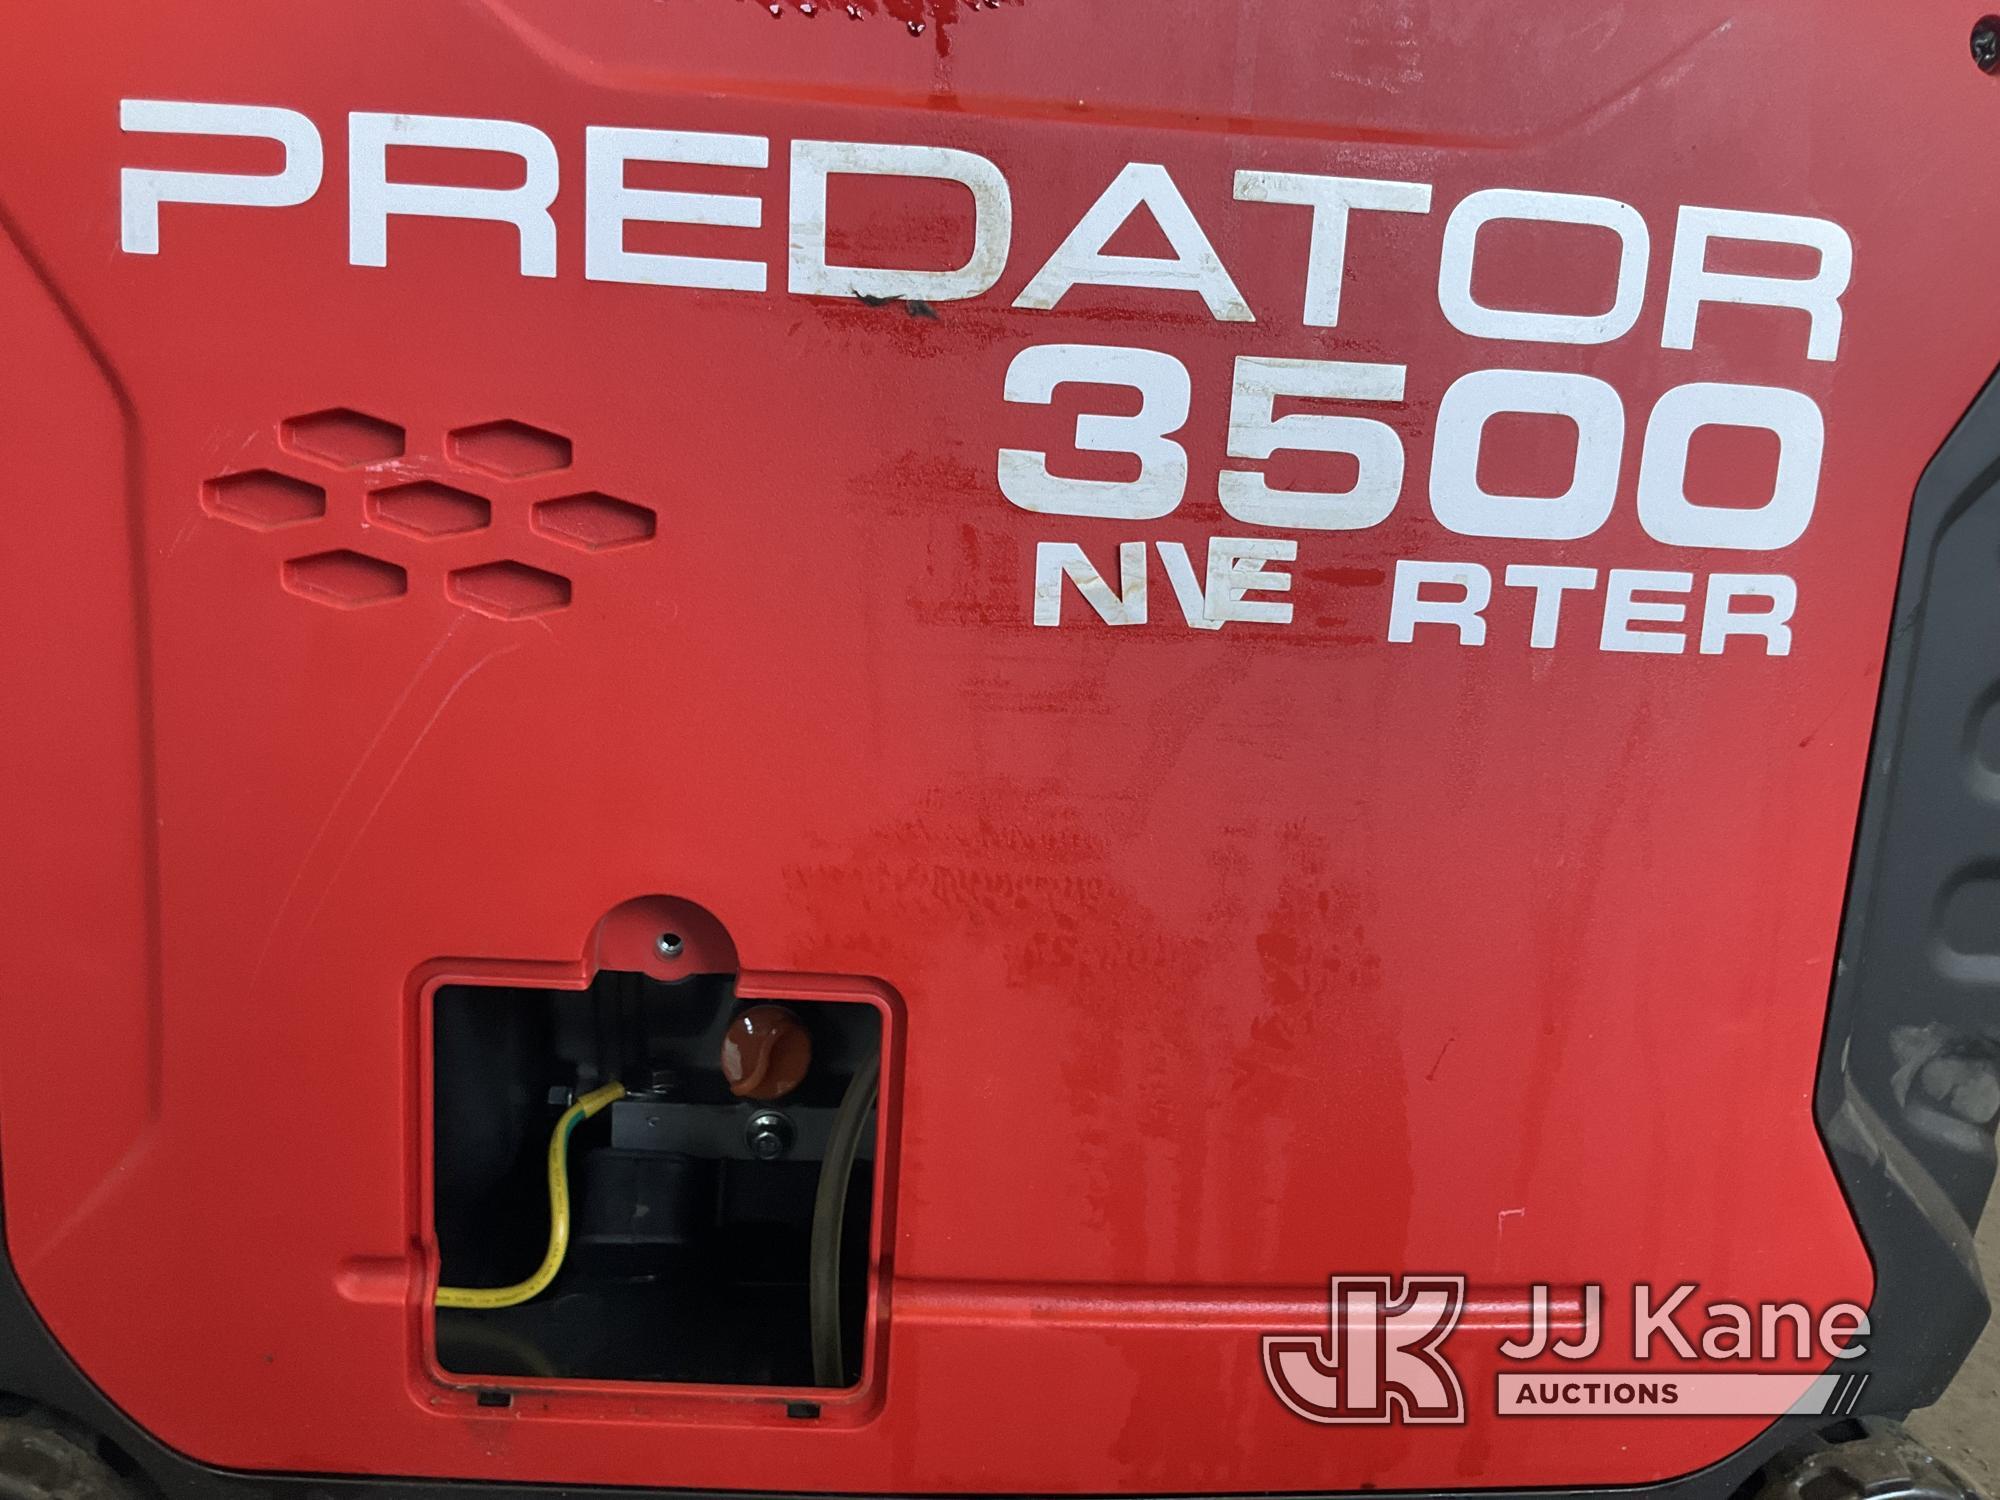 (Jurupa Valley, CA) Predator 3500 Generator (Used) NOTE: This unit is being sold AS IS/WHERE IS via